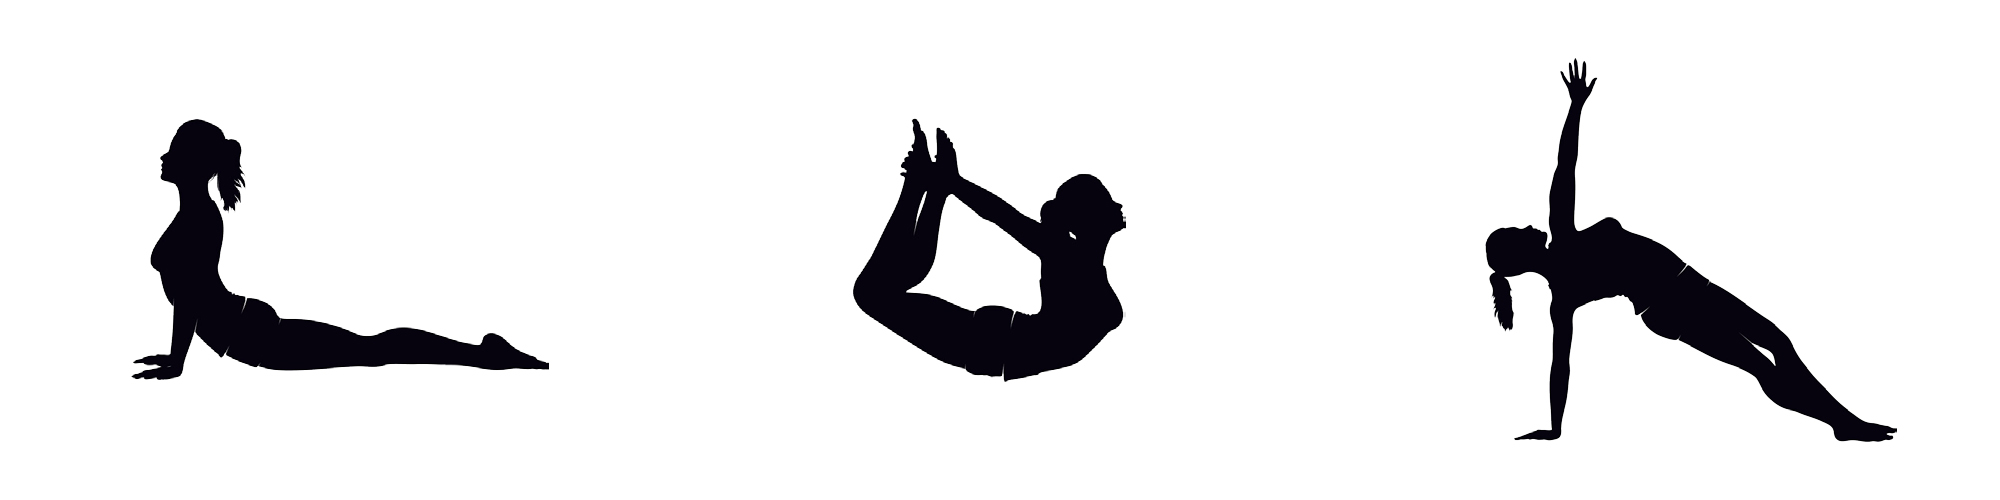 Yoga2.jpg (130 KB)